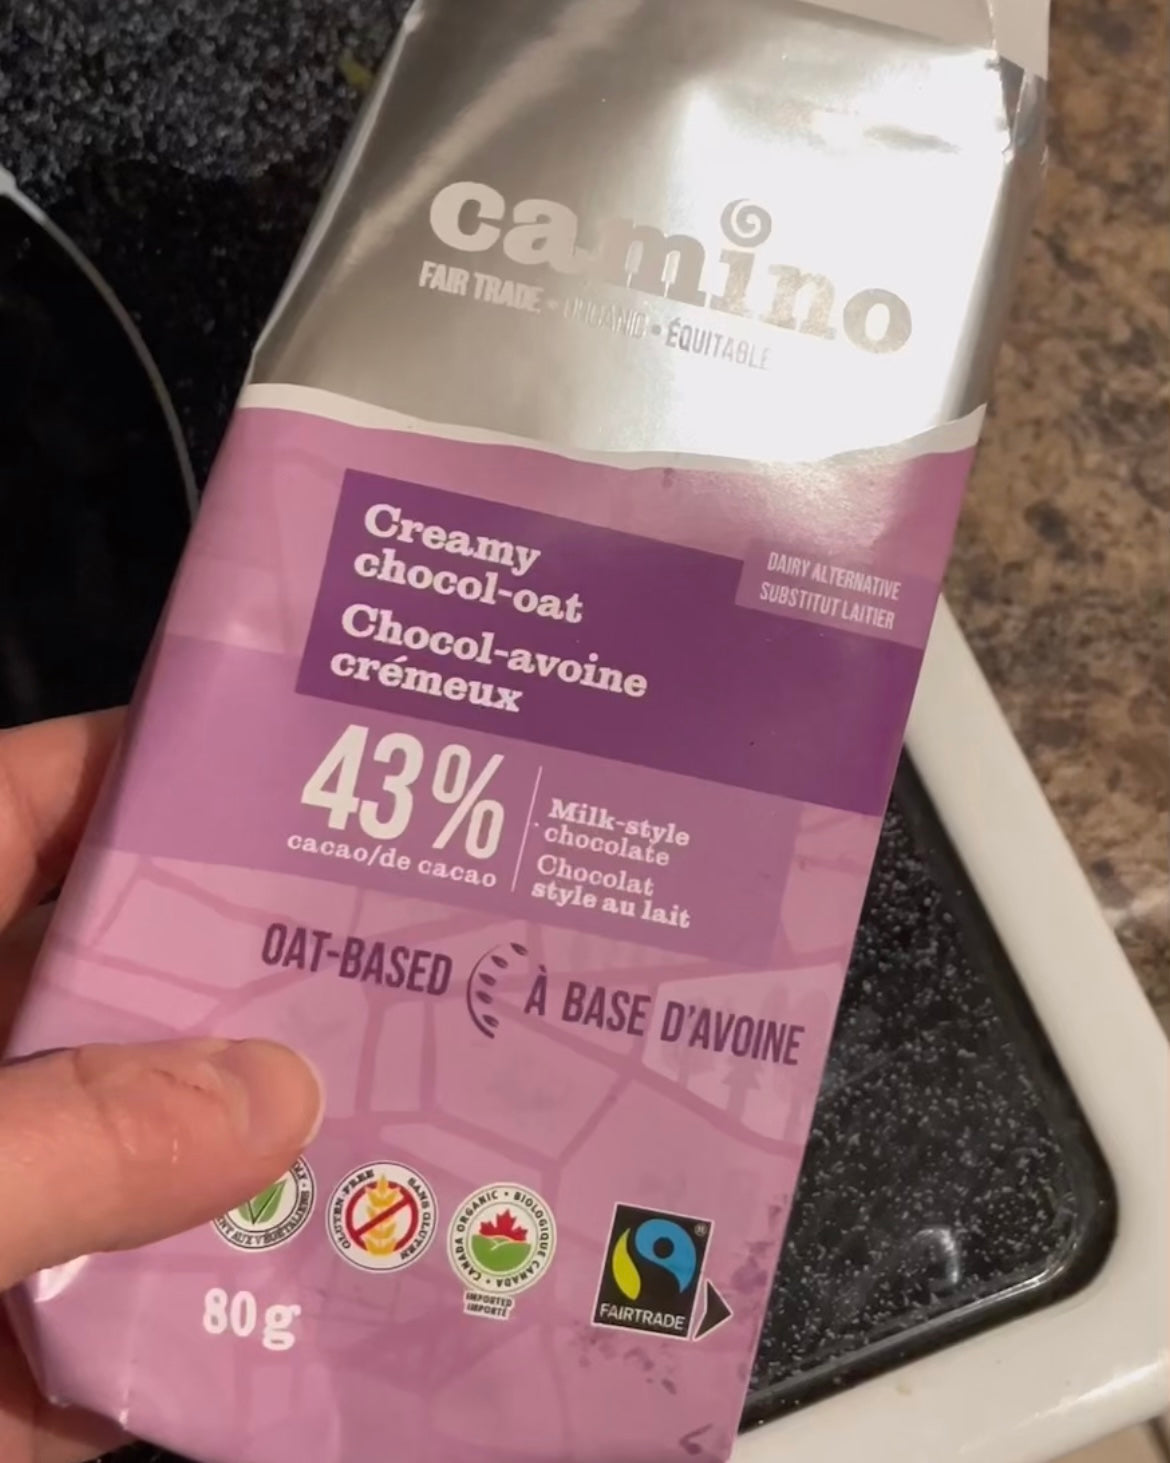 Camino Organic & Fair Trade Creamy Chocol-Oat Oat-based Milk-Style (43% Cacao) Chocolate Bar